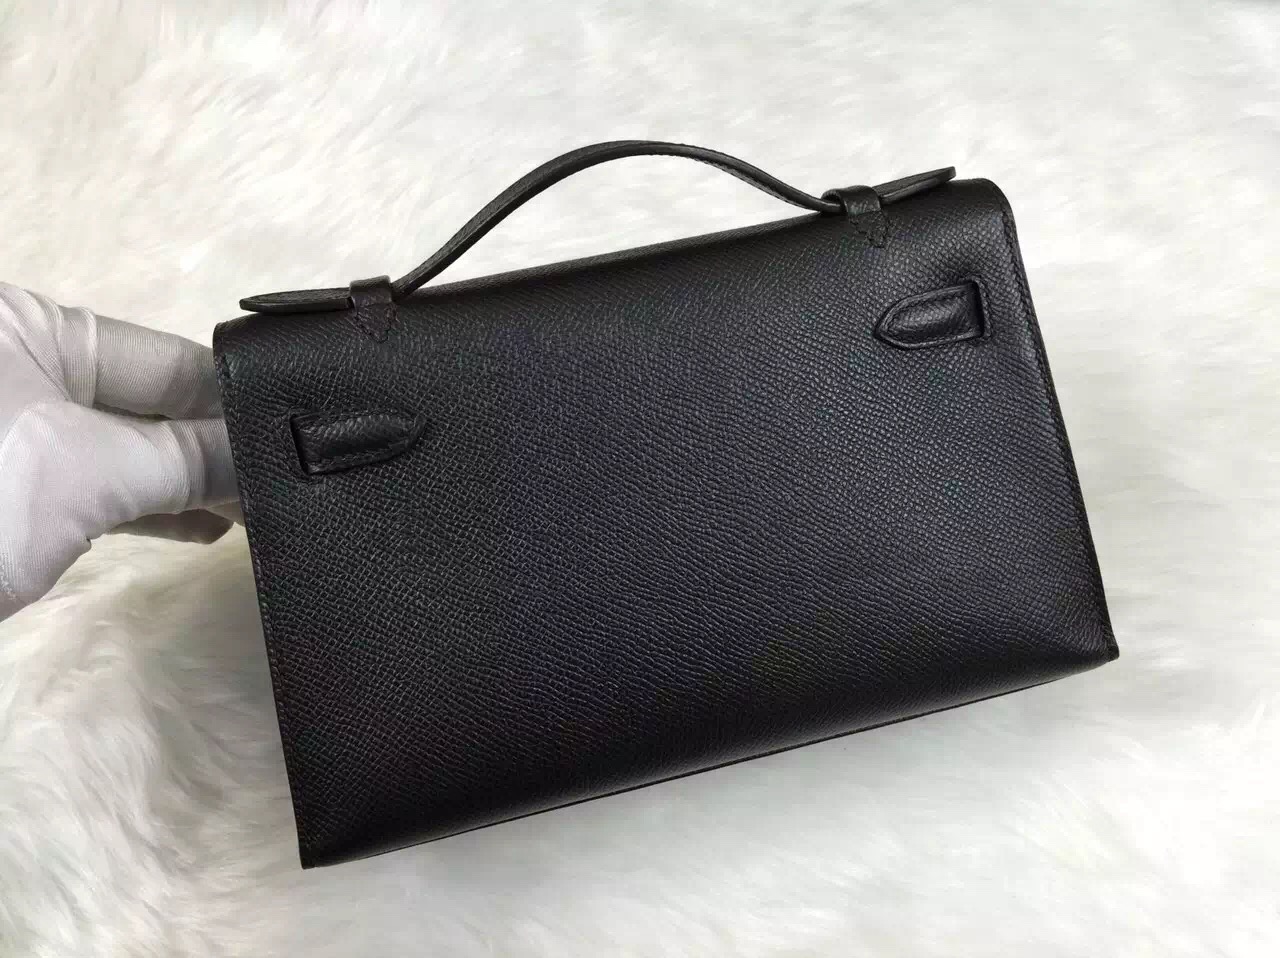 Discount Hermes Black Epsom Leather Mini Kelly Bag Gold Hardware Online